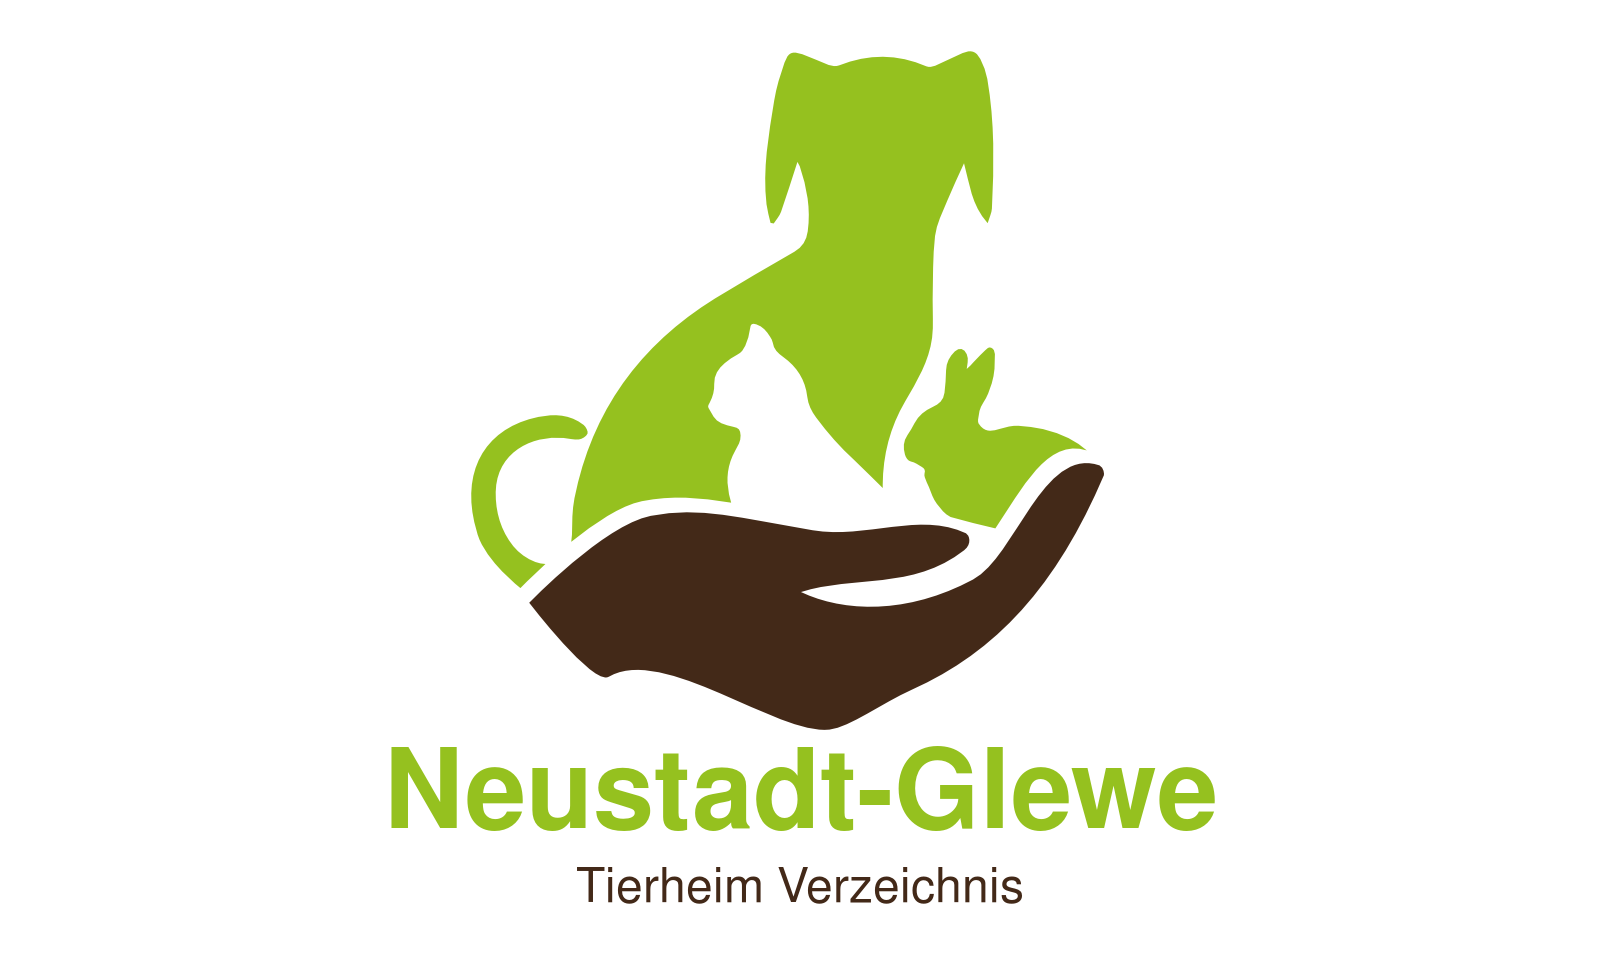 Tierheim Neustadt-Glewe